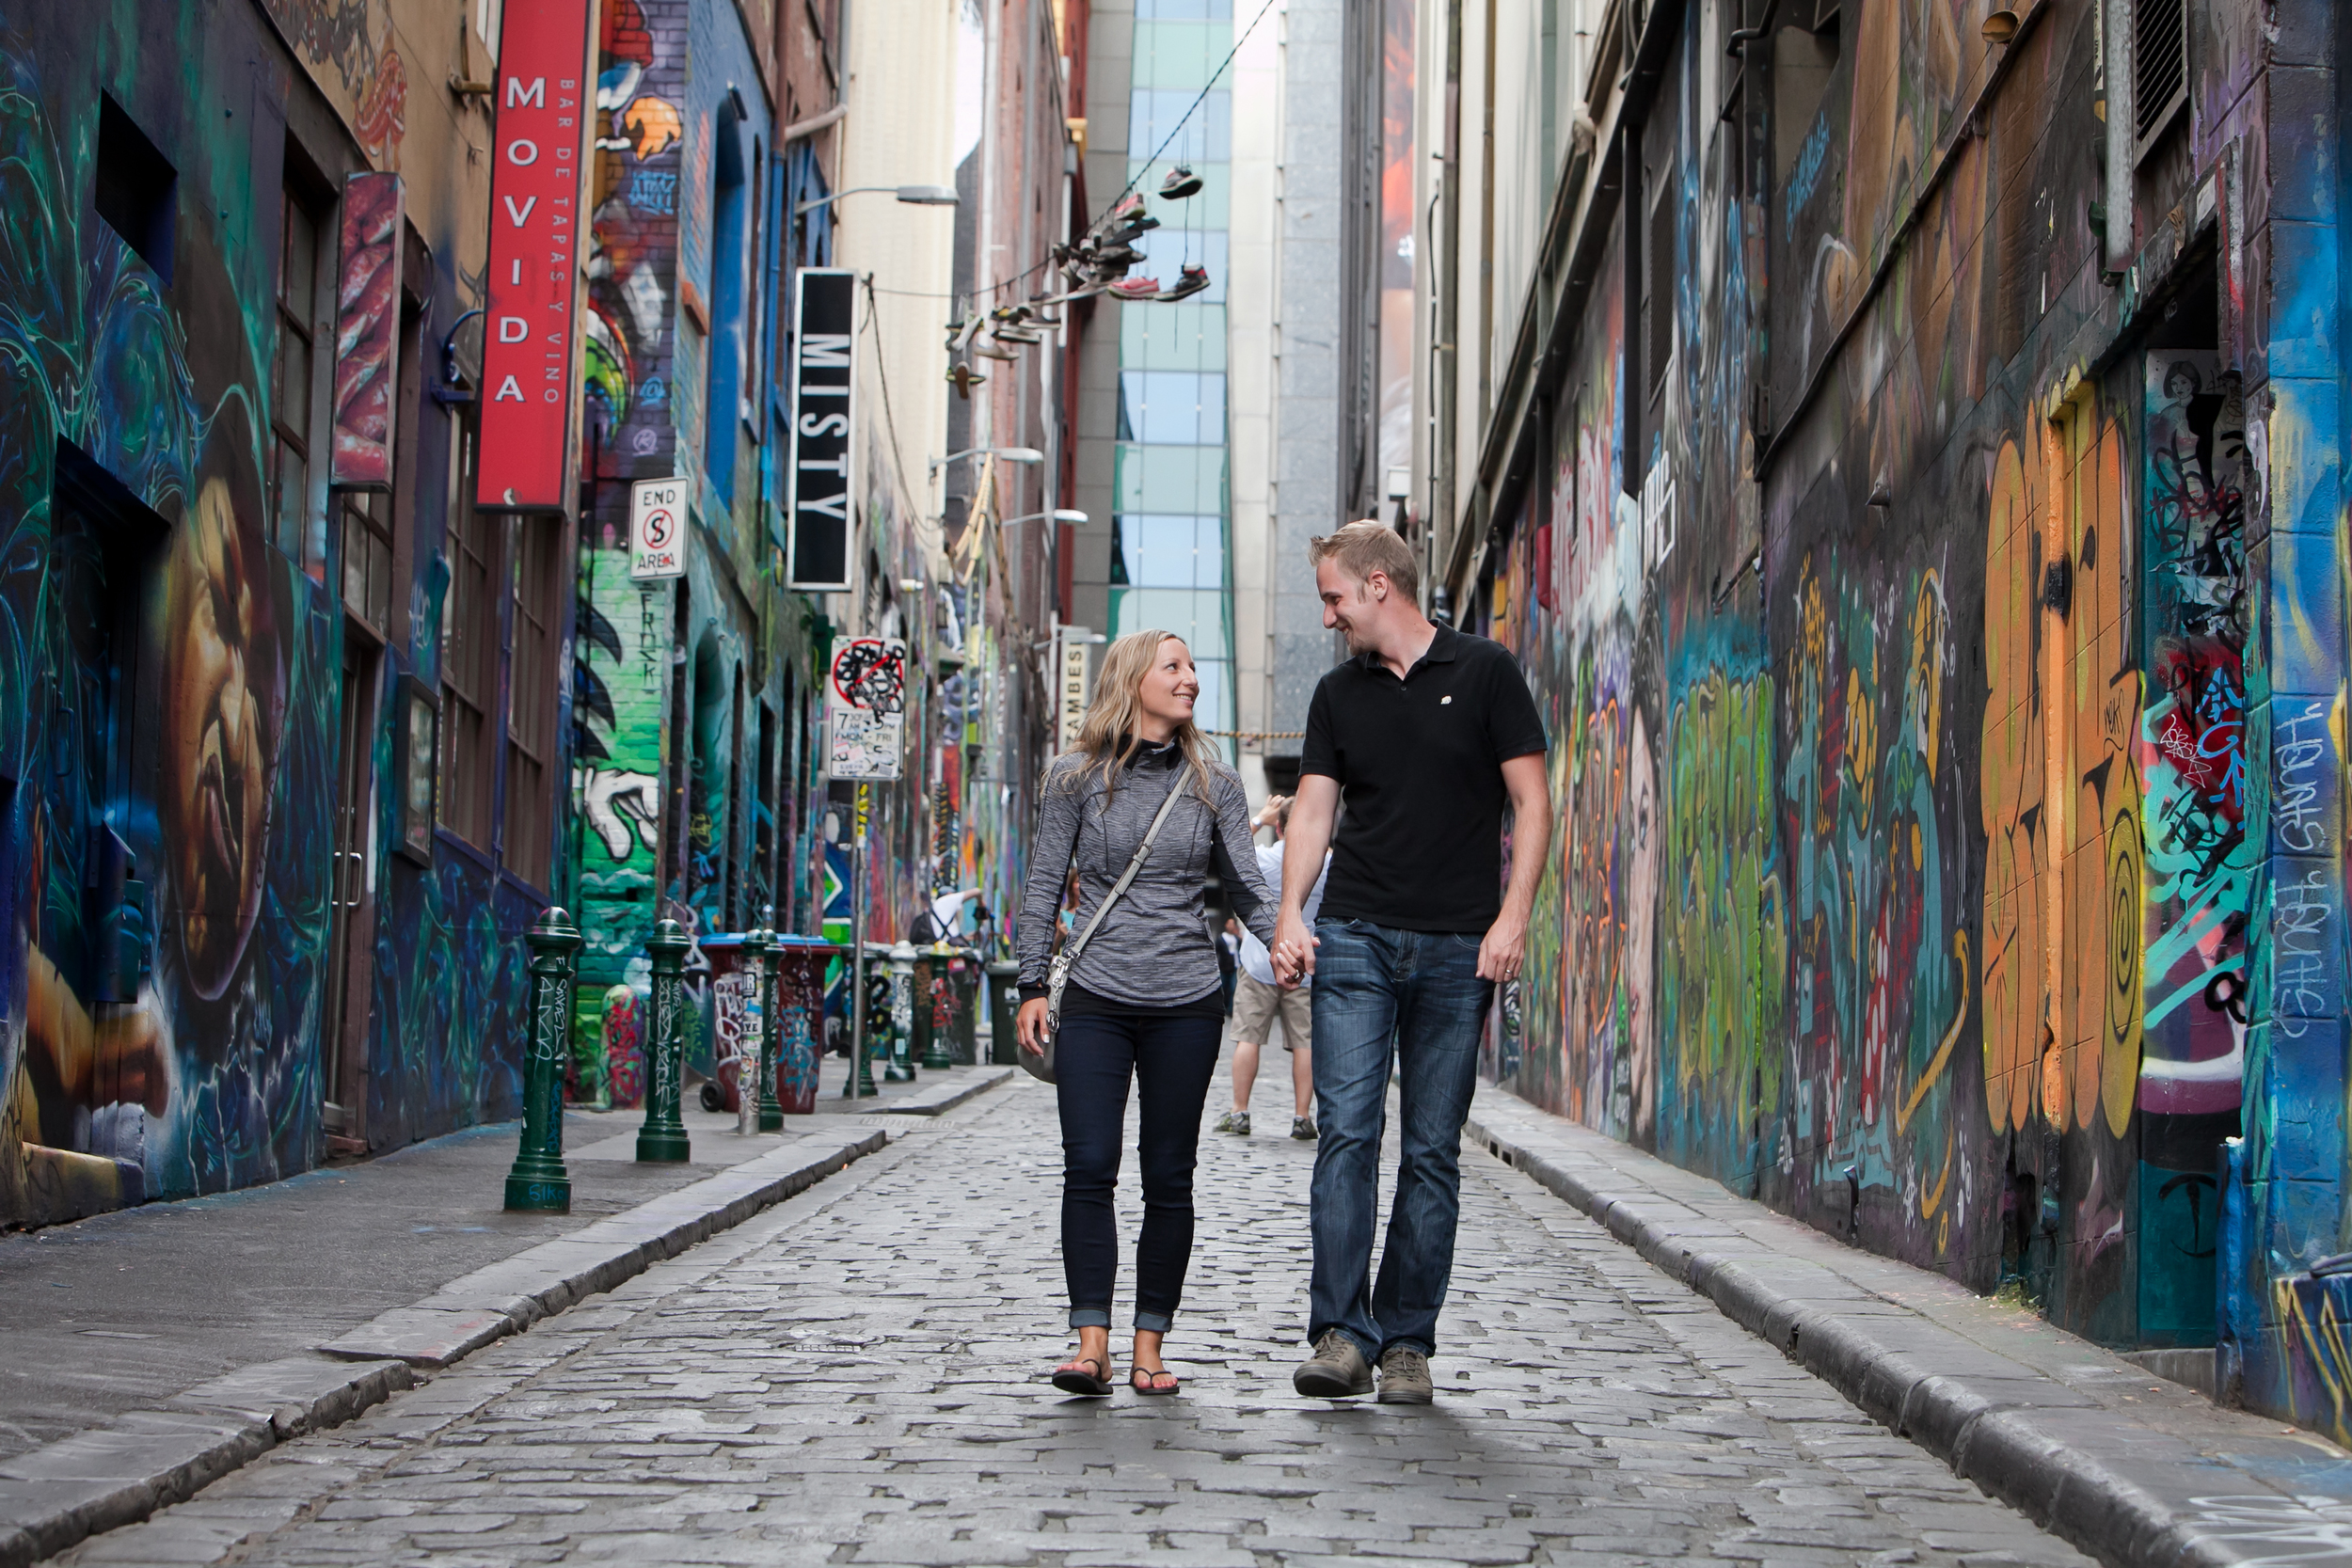  Canadian honeymooners Sarah & Bryan stroll down Hosier Lane 